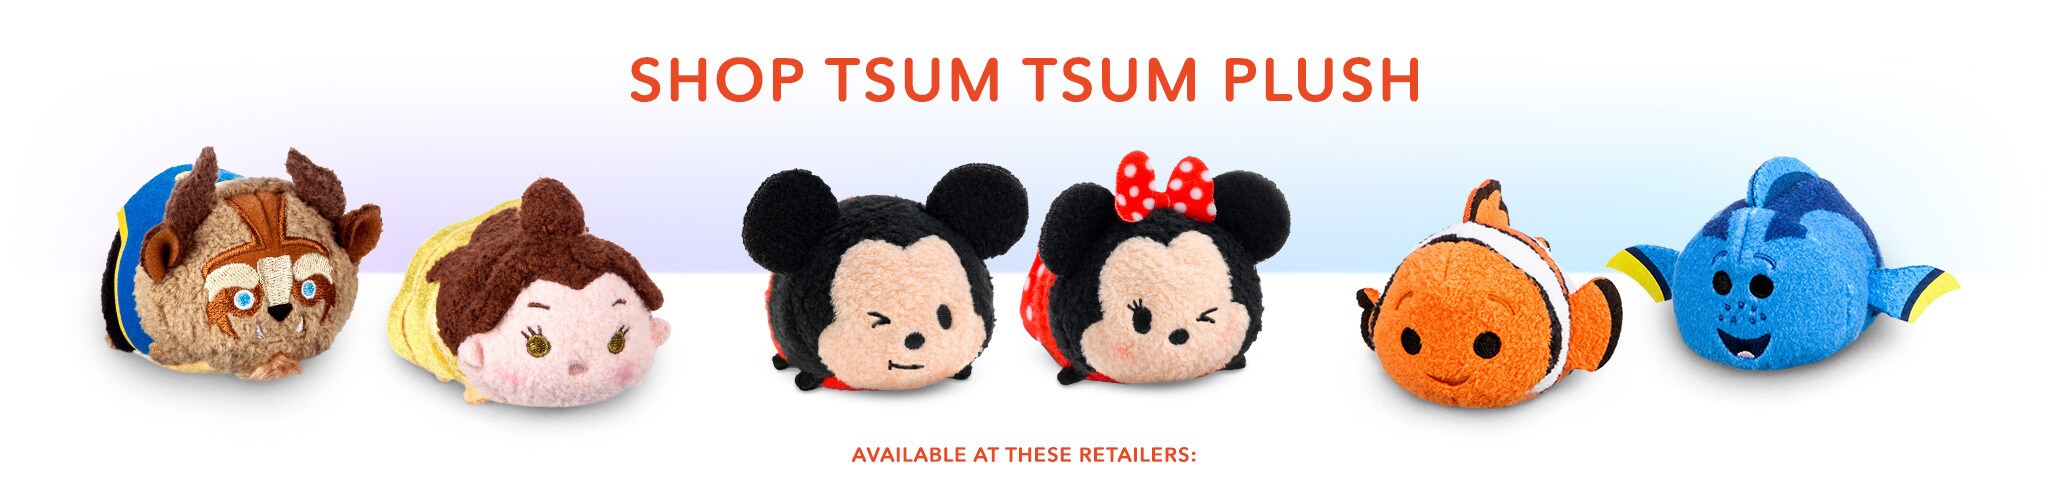 Disney Tsum Tsum Disney Characters